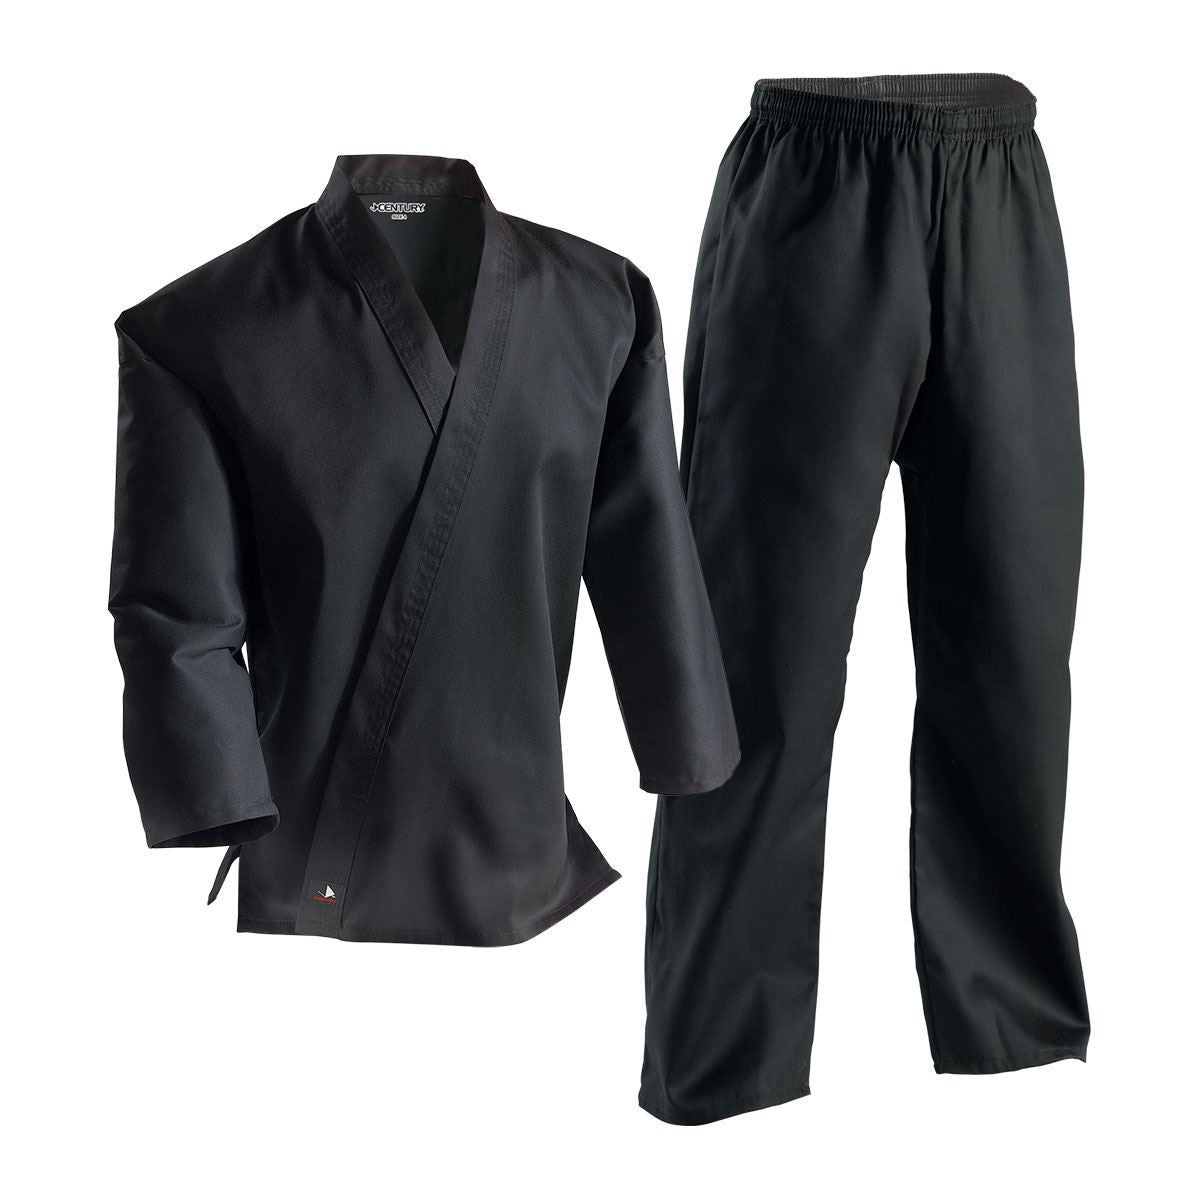 6 oz. Lightweight Student Uniform two piece black